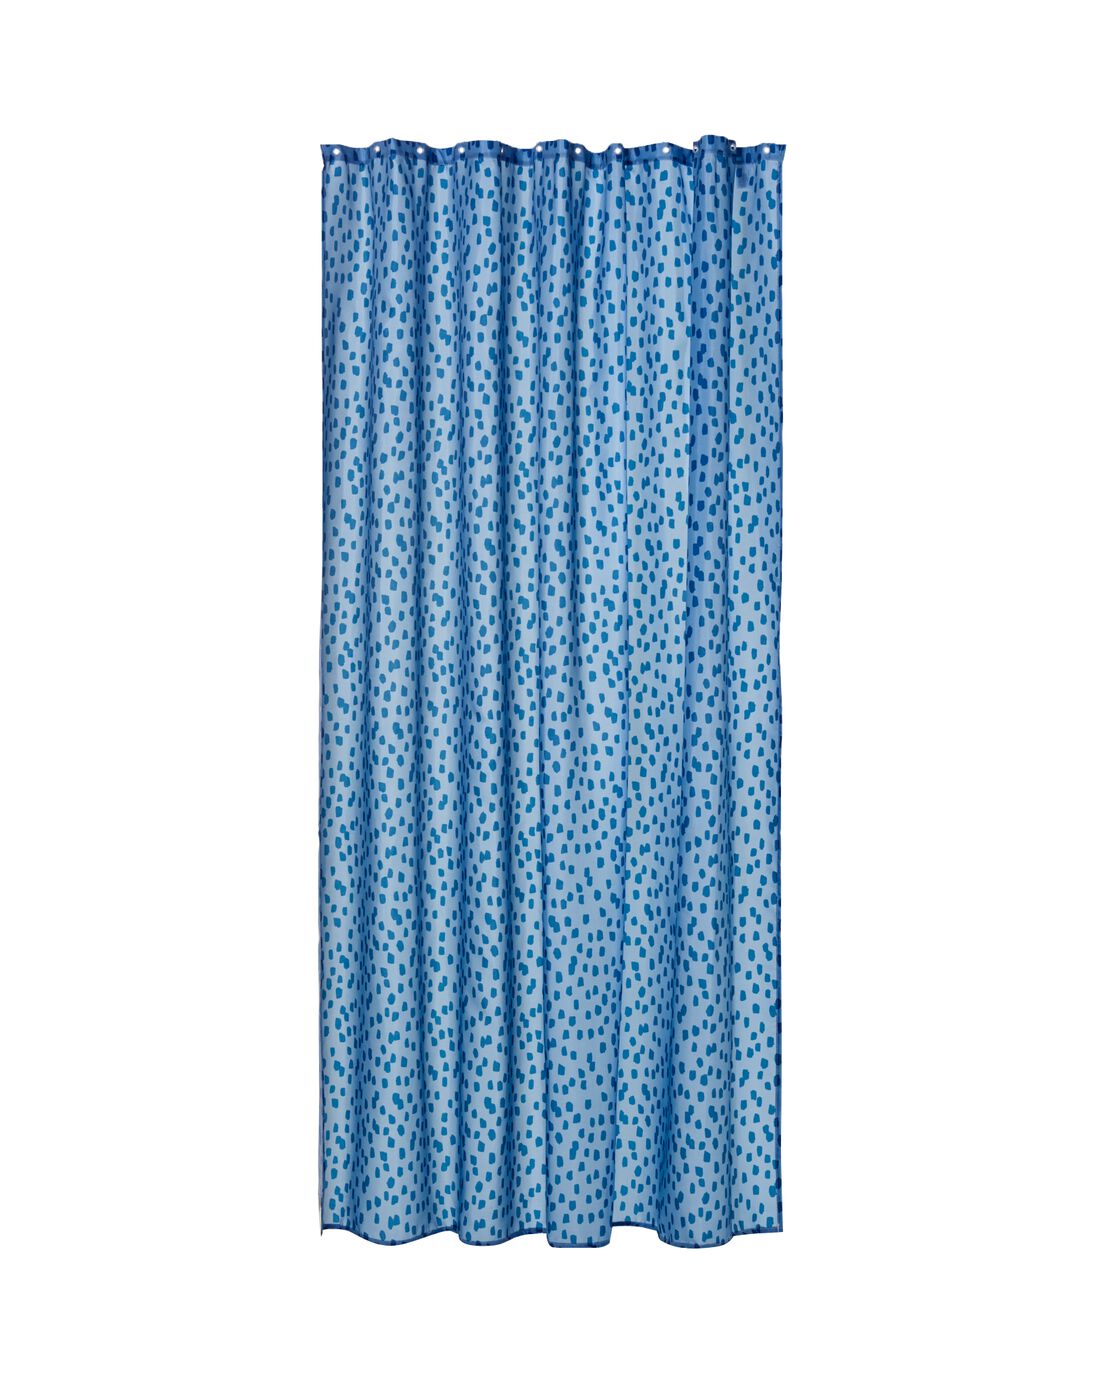 Image of HEMA Douchegordijn 180x200 Recycled Polyester Druppels (blauw)